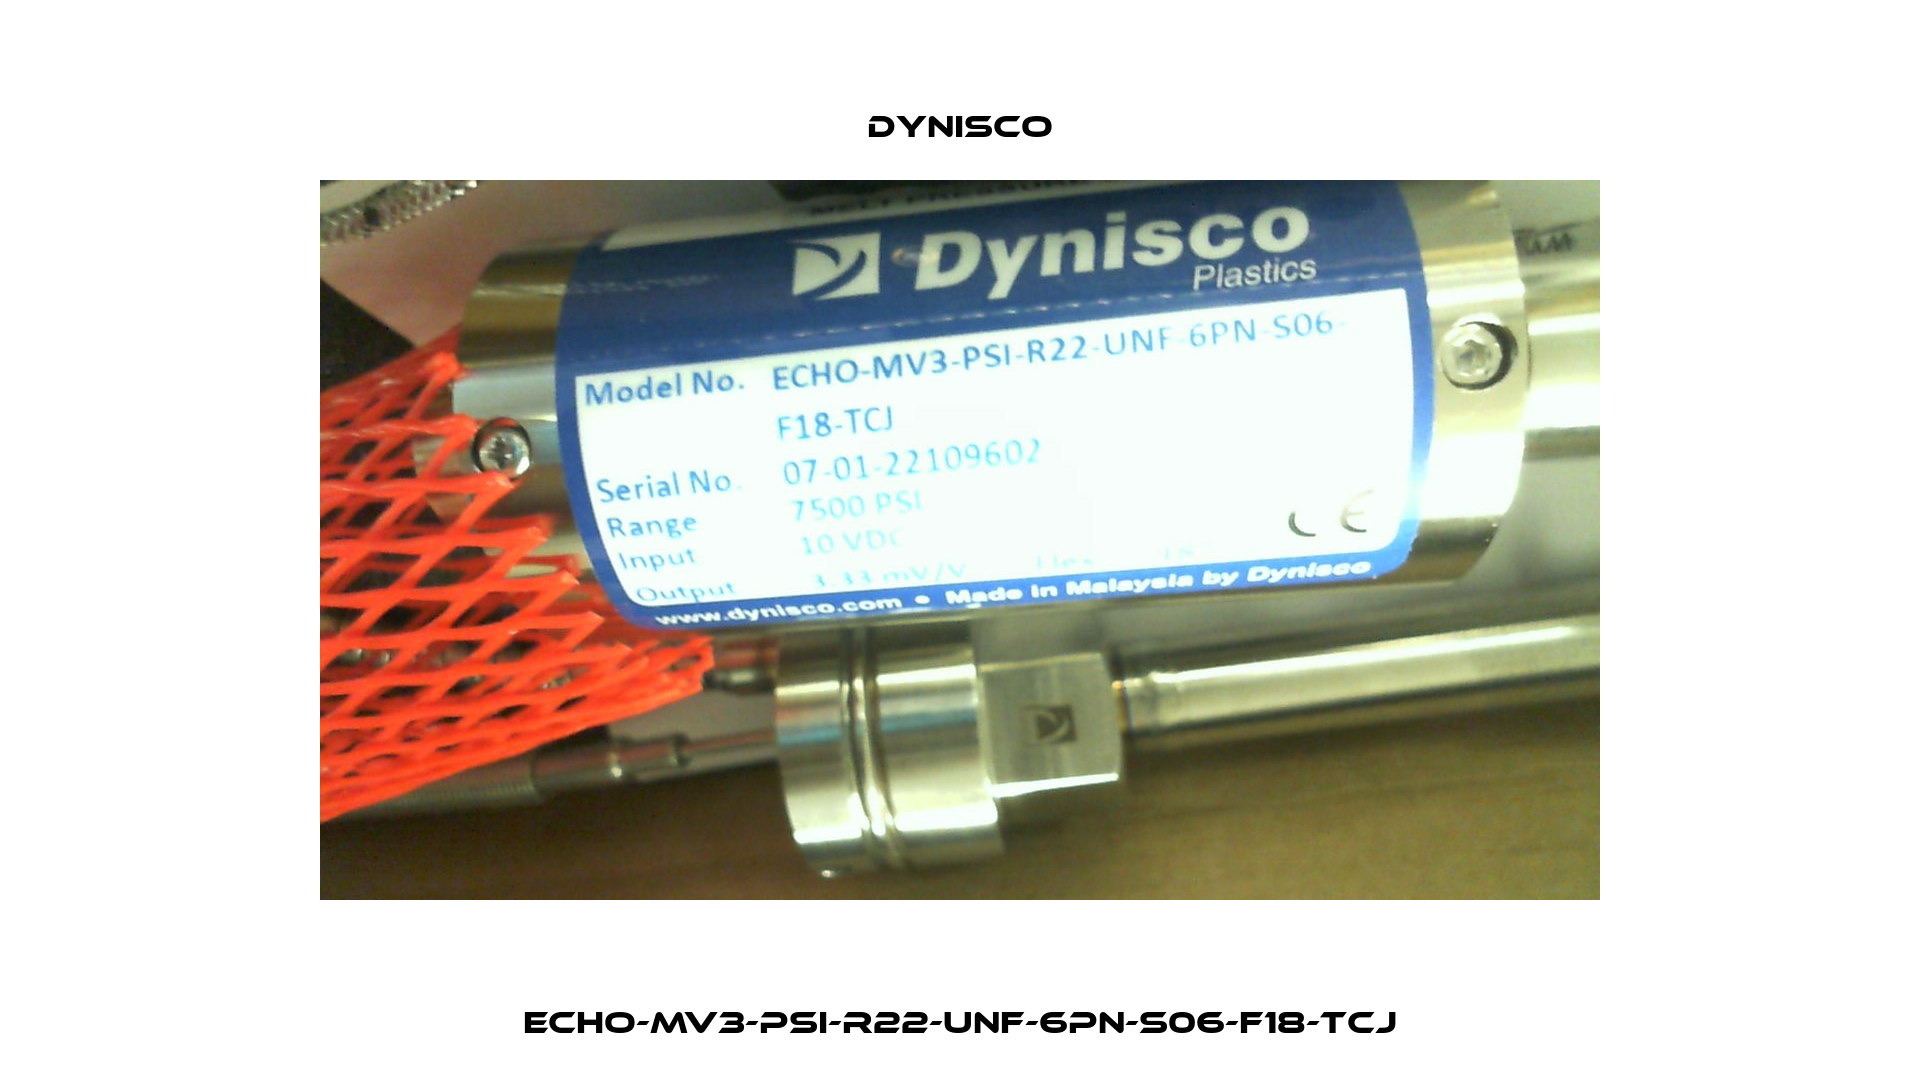 ECHO-MV3-PSI-R22-UNF-6PN-S06-F18-TCJ Dynisco